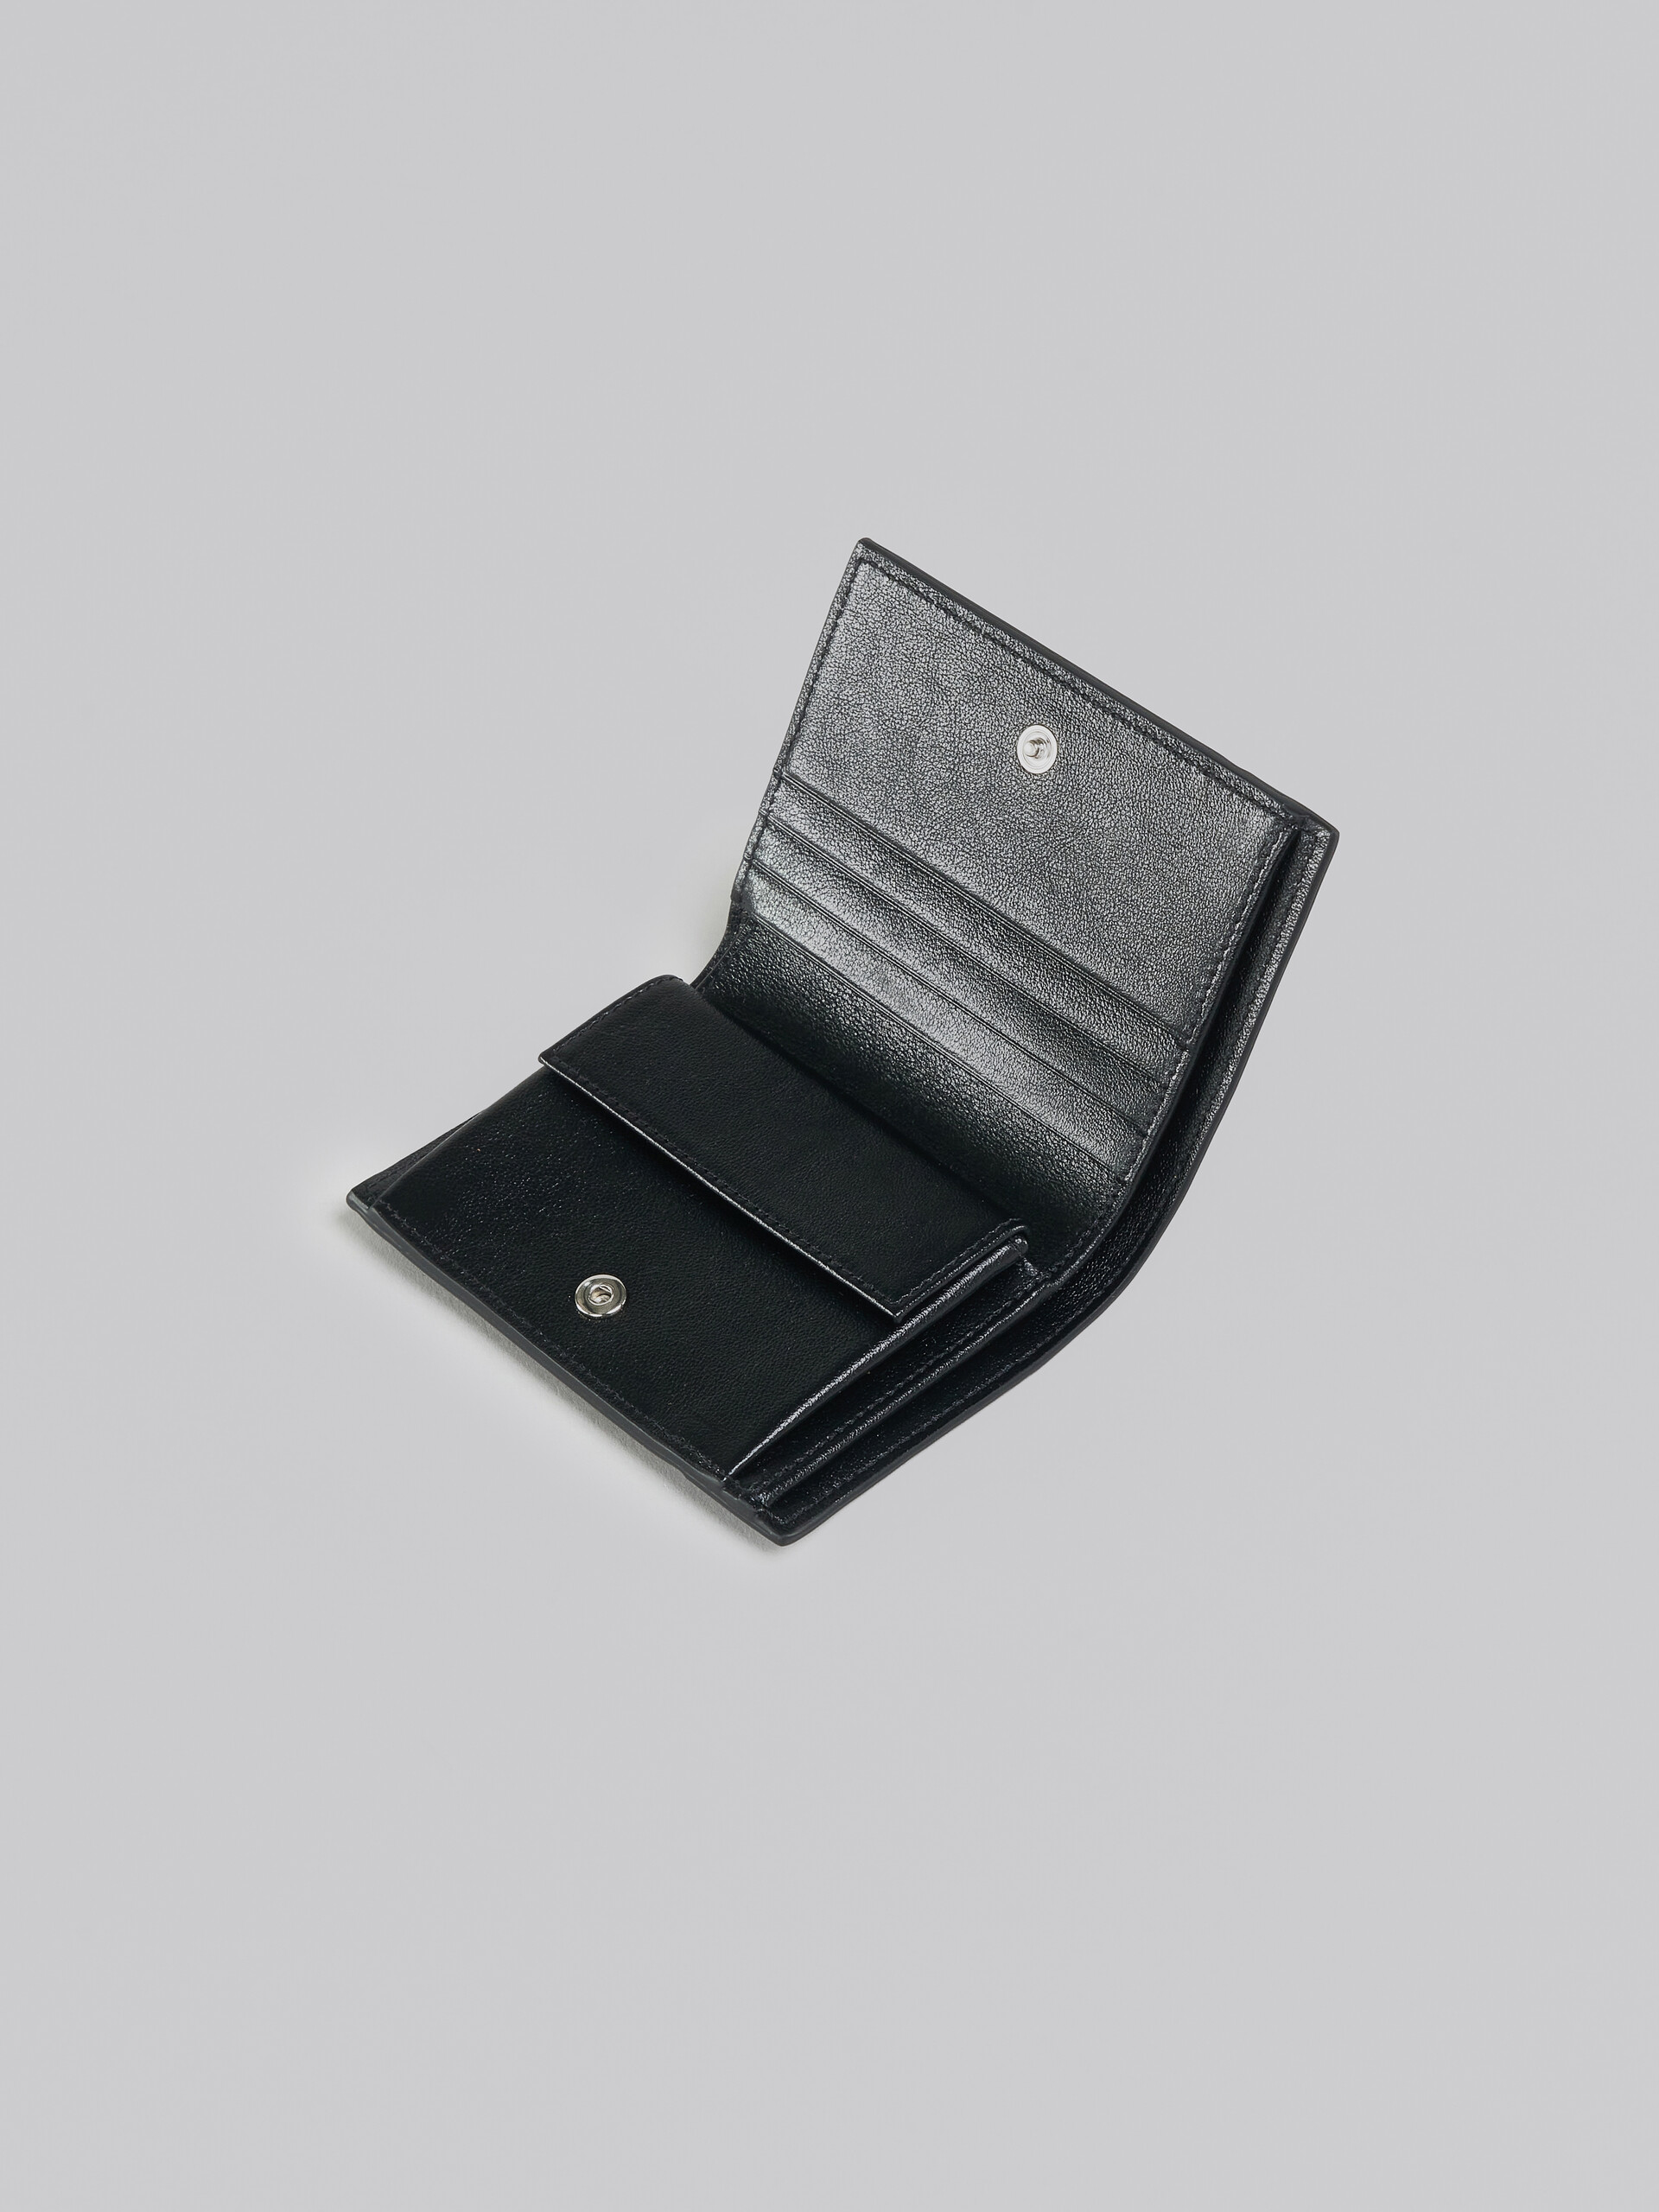 Navy blue and black leather bi-fold wallet - Wallets - Image 4